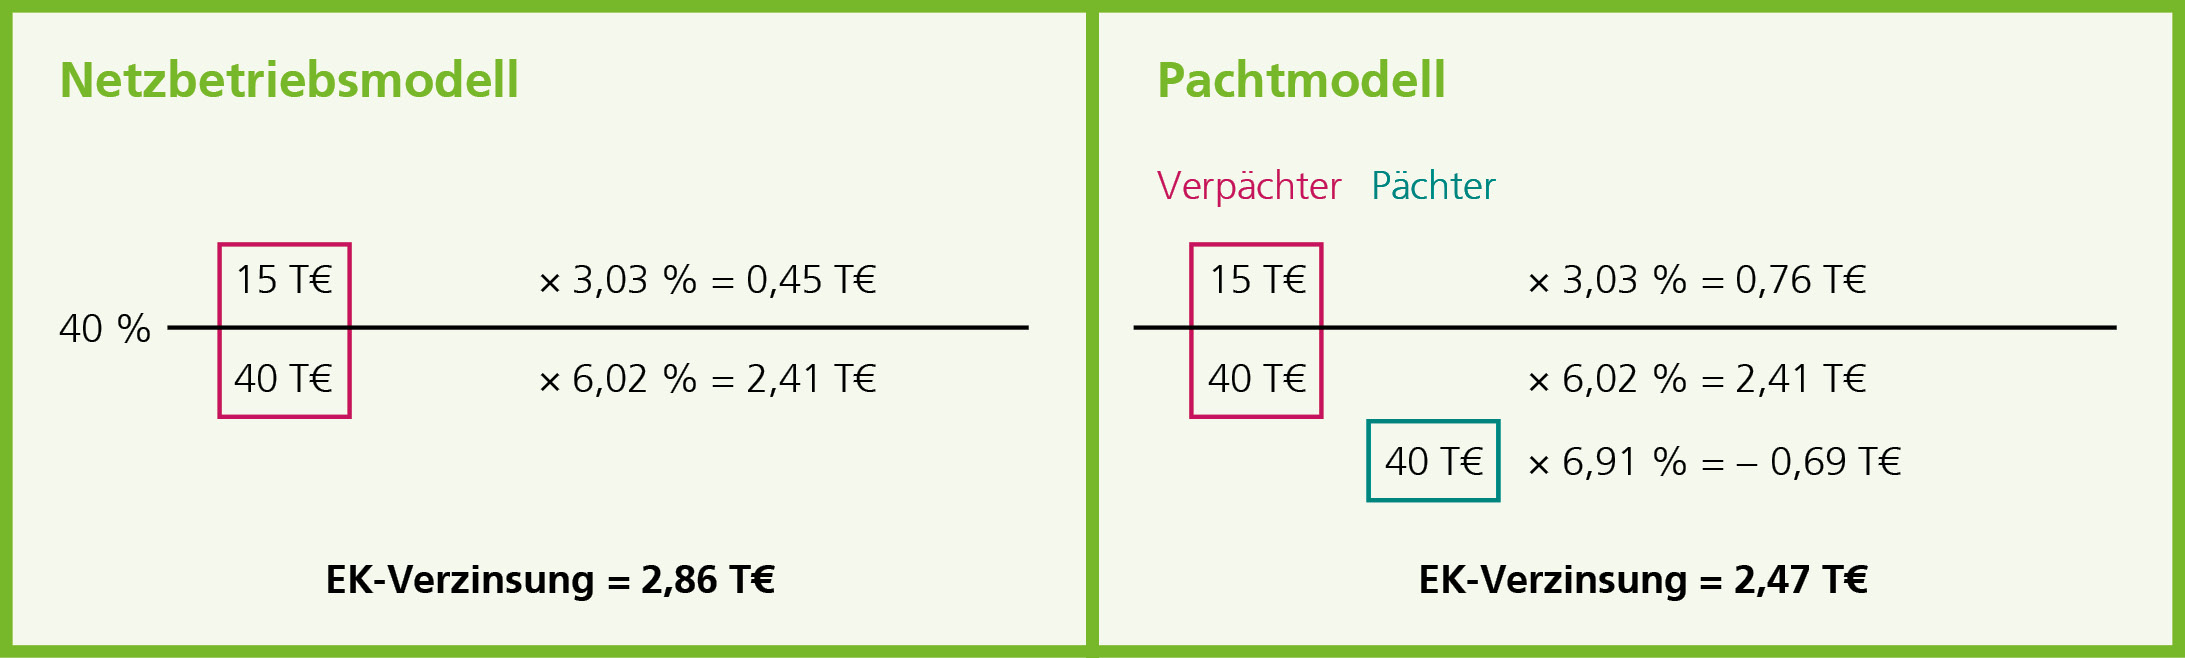 Netzbetriebsmodell und Pachtmodell